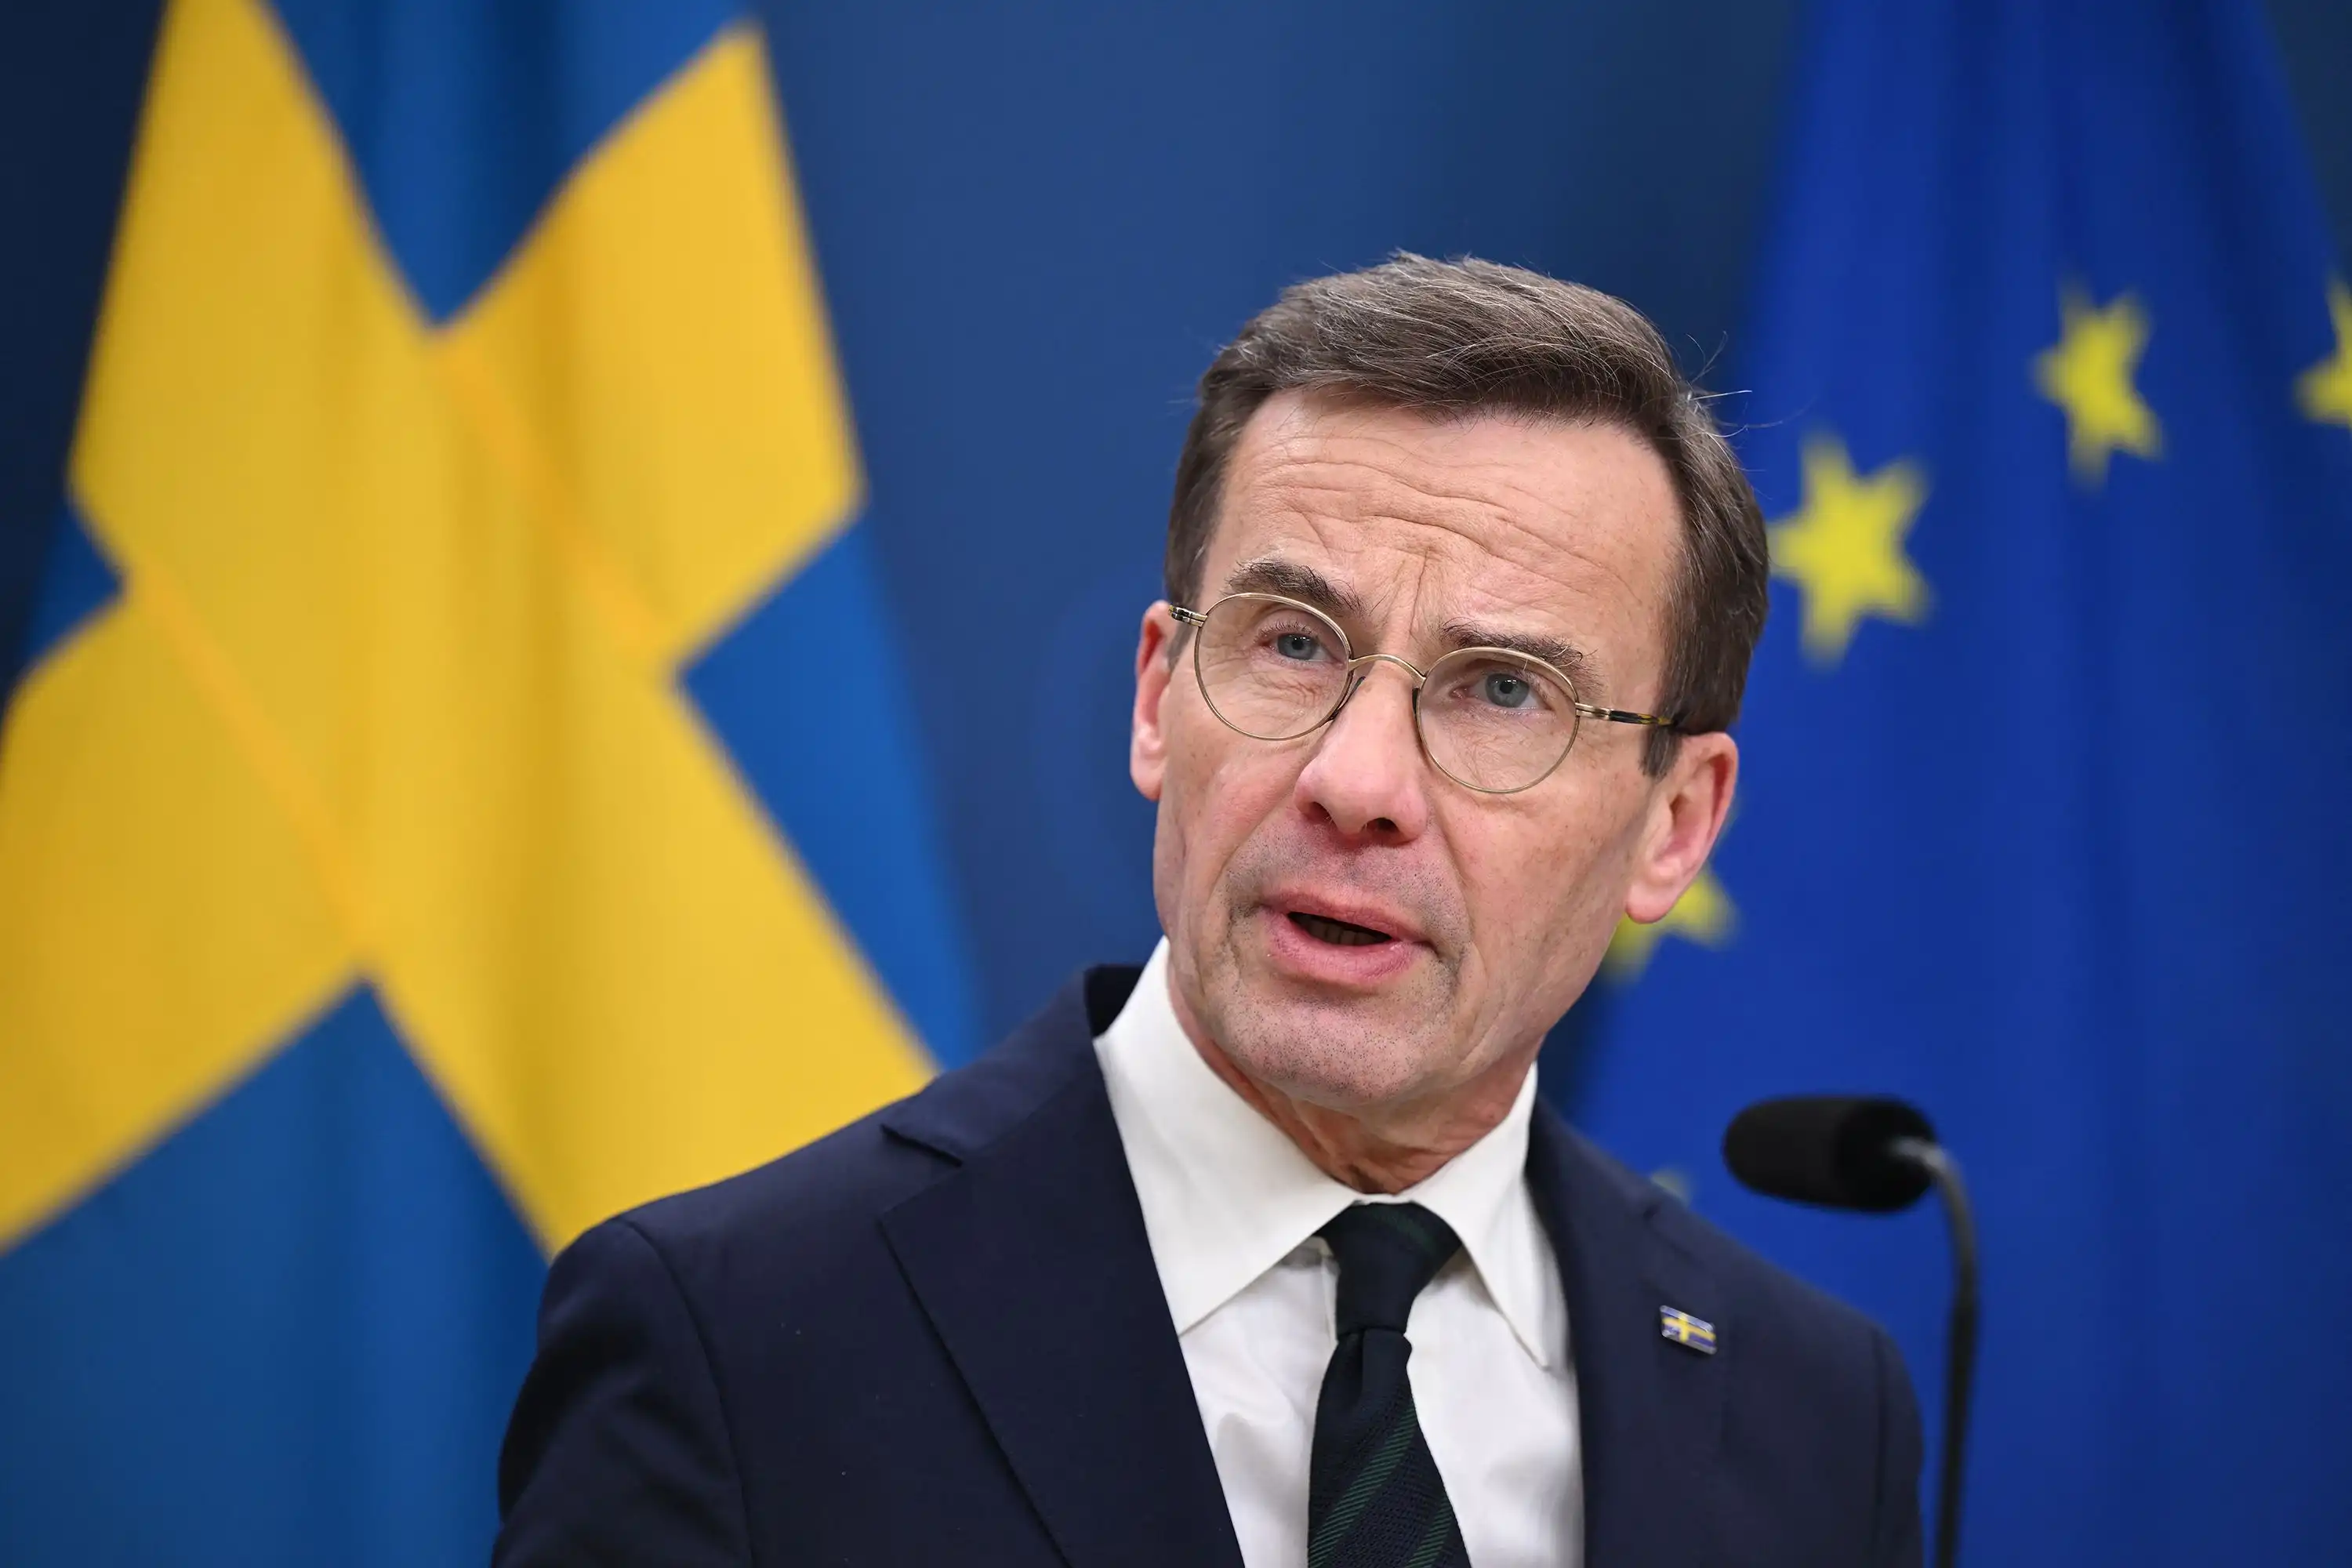 Sweden joins NATO as alliance's 32nd member